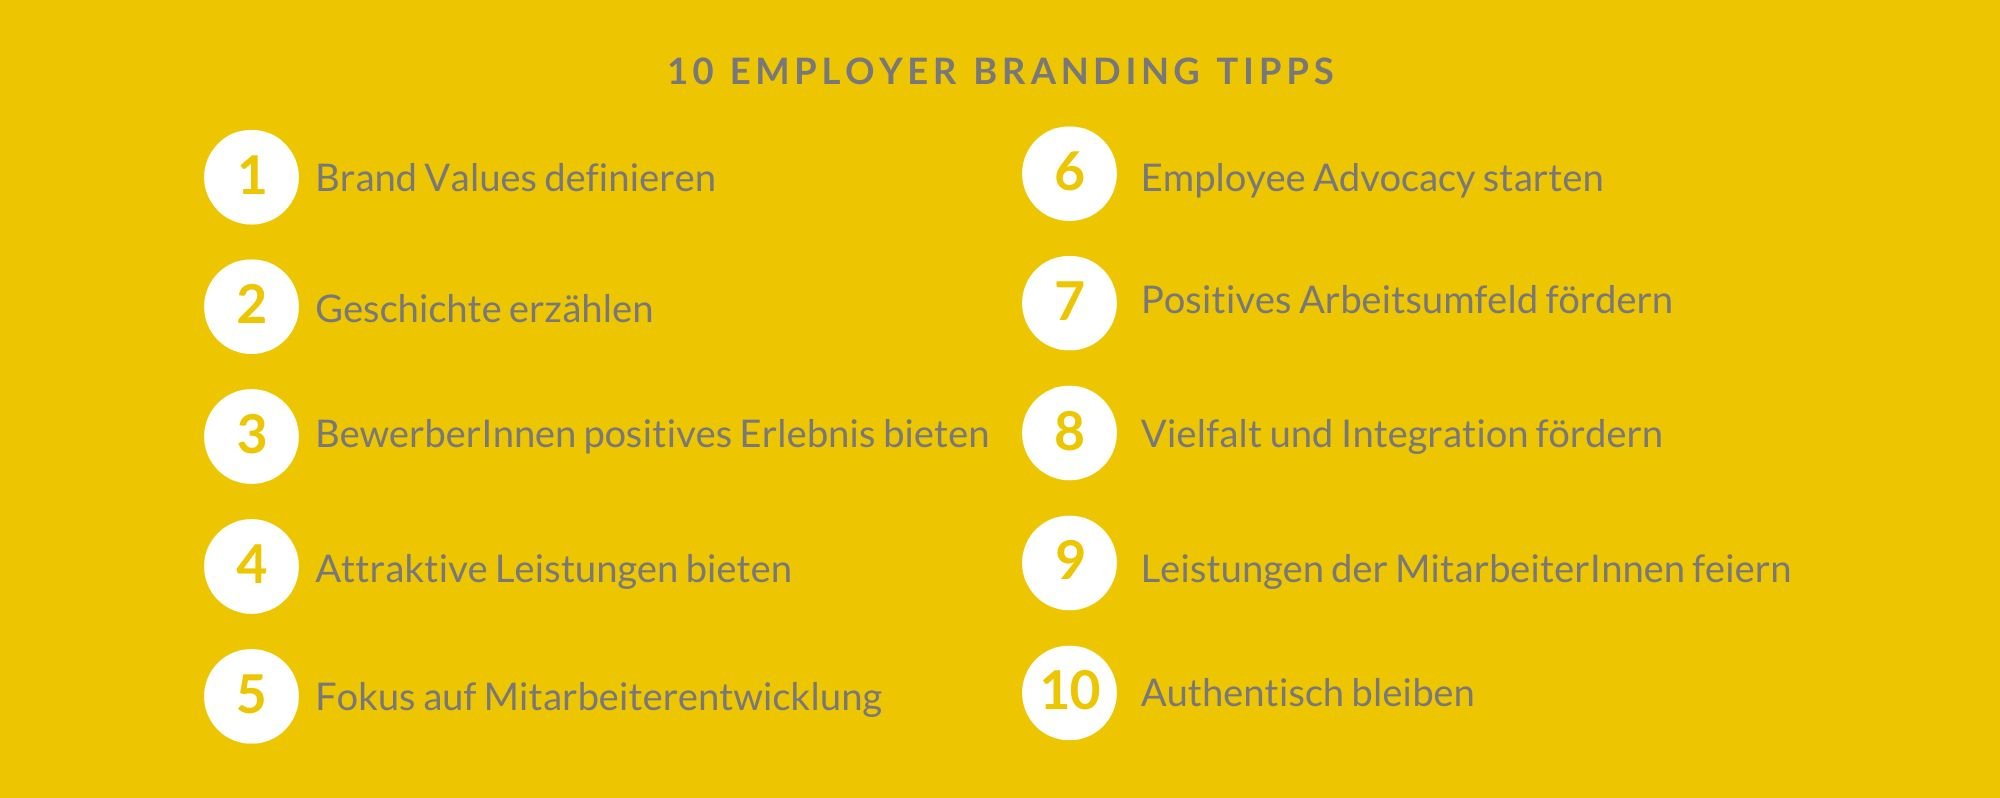 10 Employer Branding Tipps